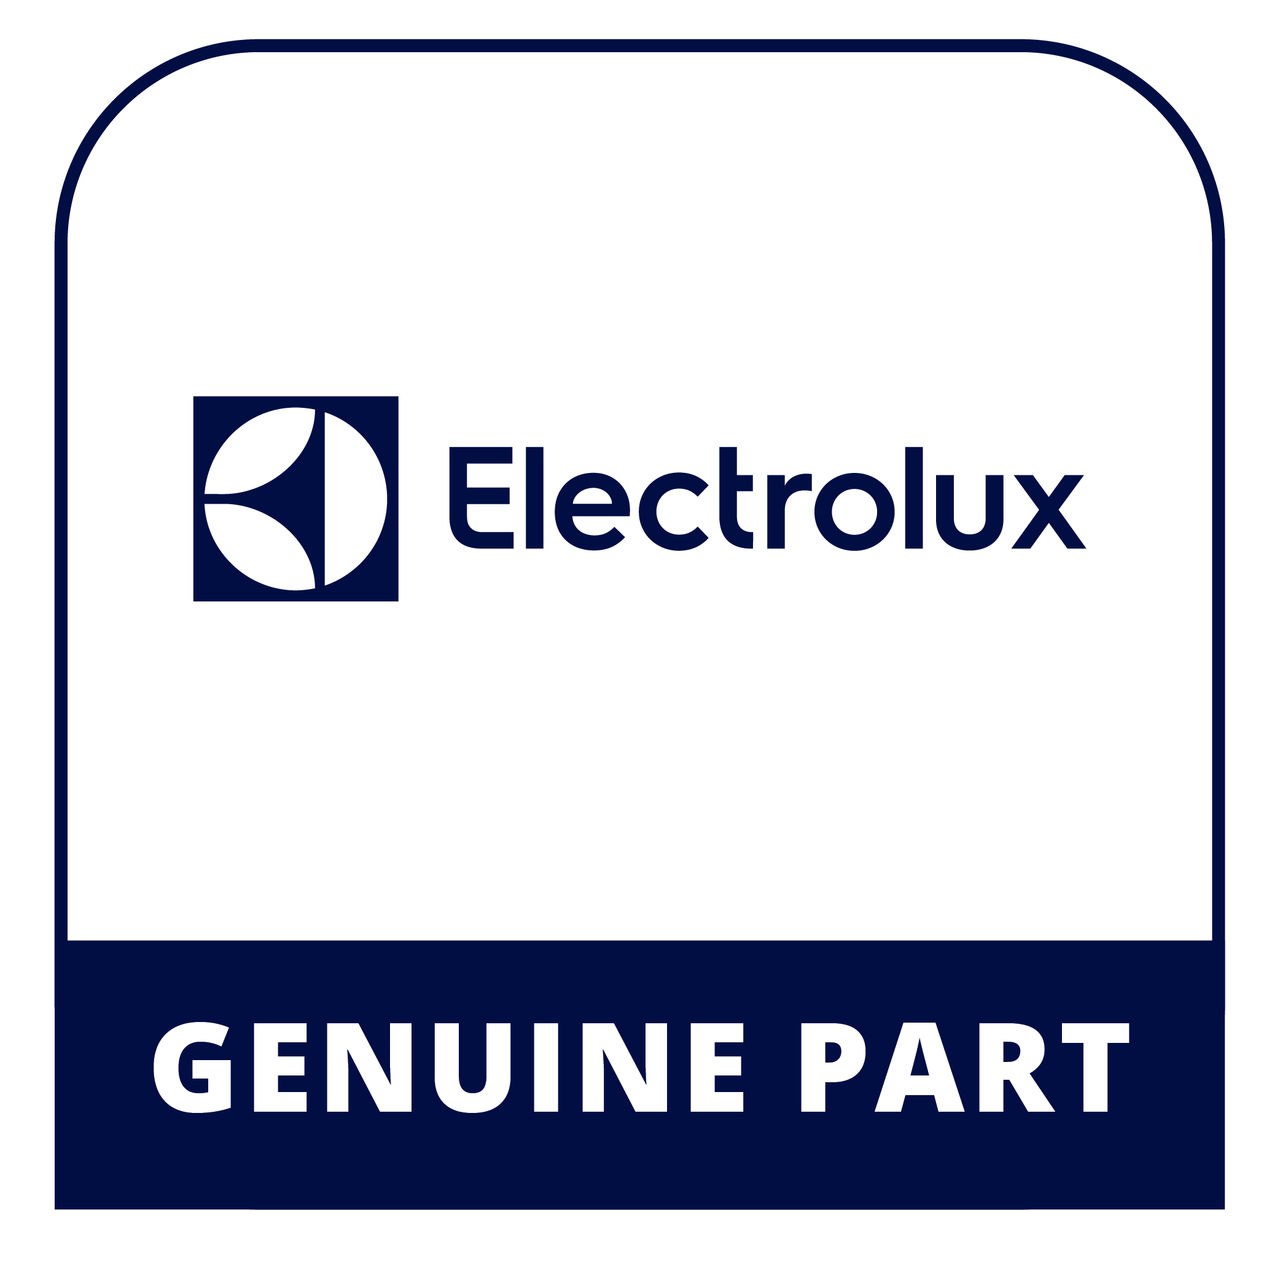 Frigidaire - Electrolux 318367401 Bracket - Genuine Electrolux Part